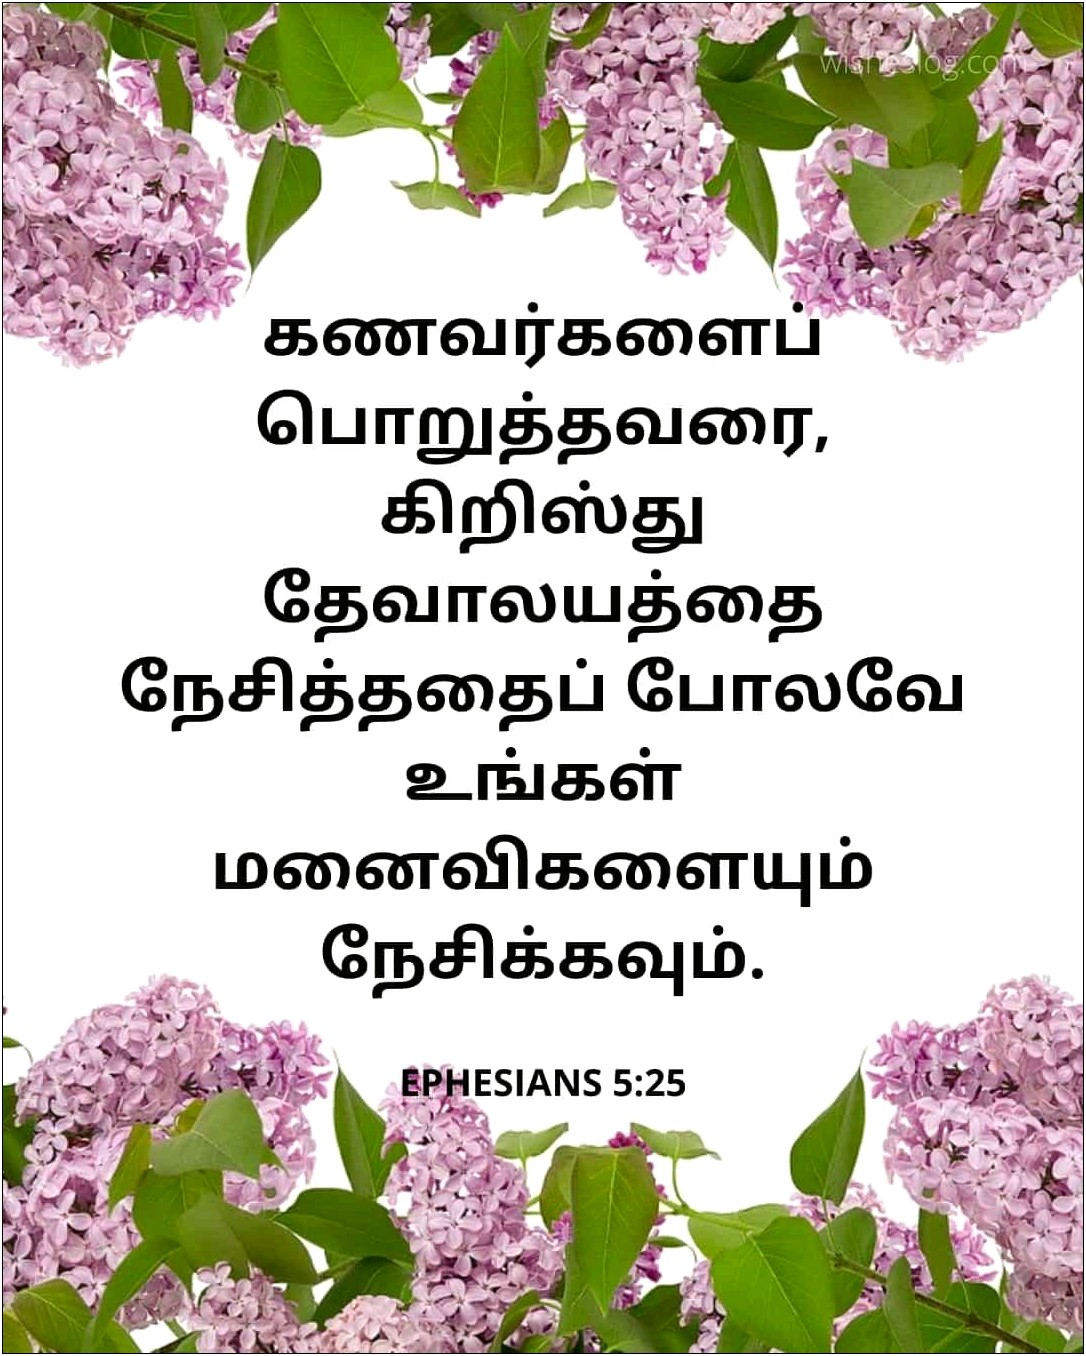 Tamil Bible Verses For Wedding Invitations